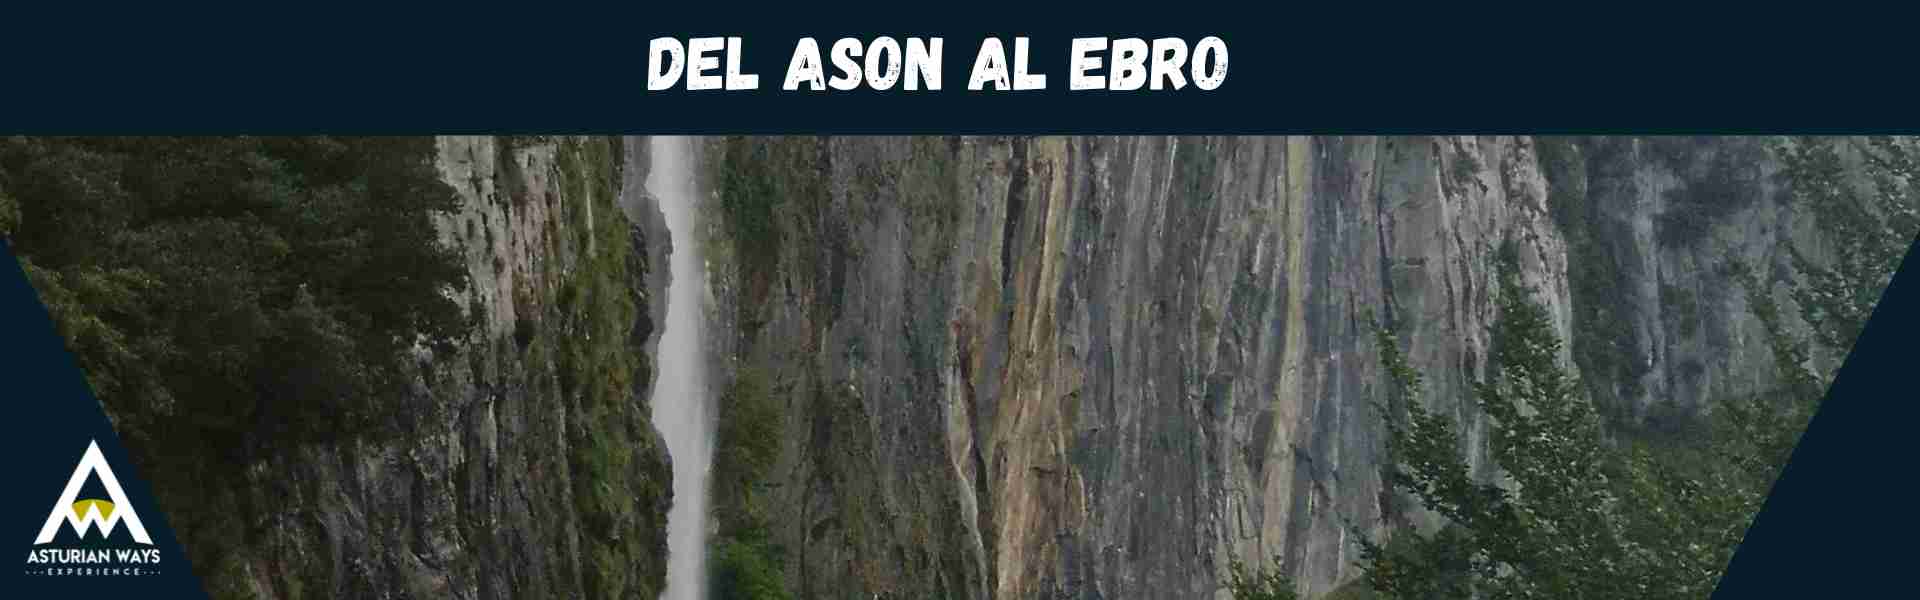 Viaje del Asón al Ebro